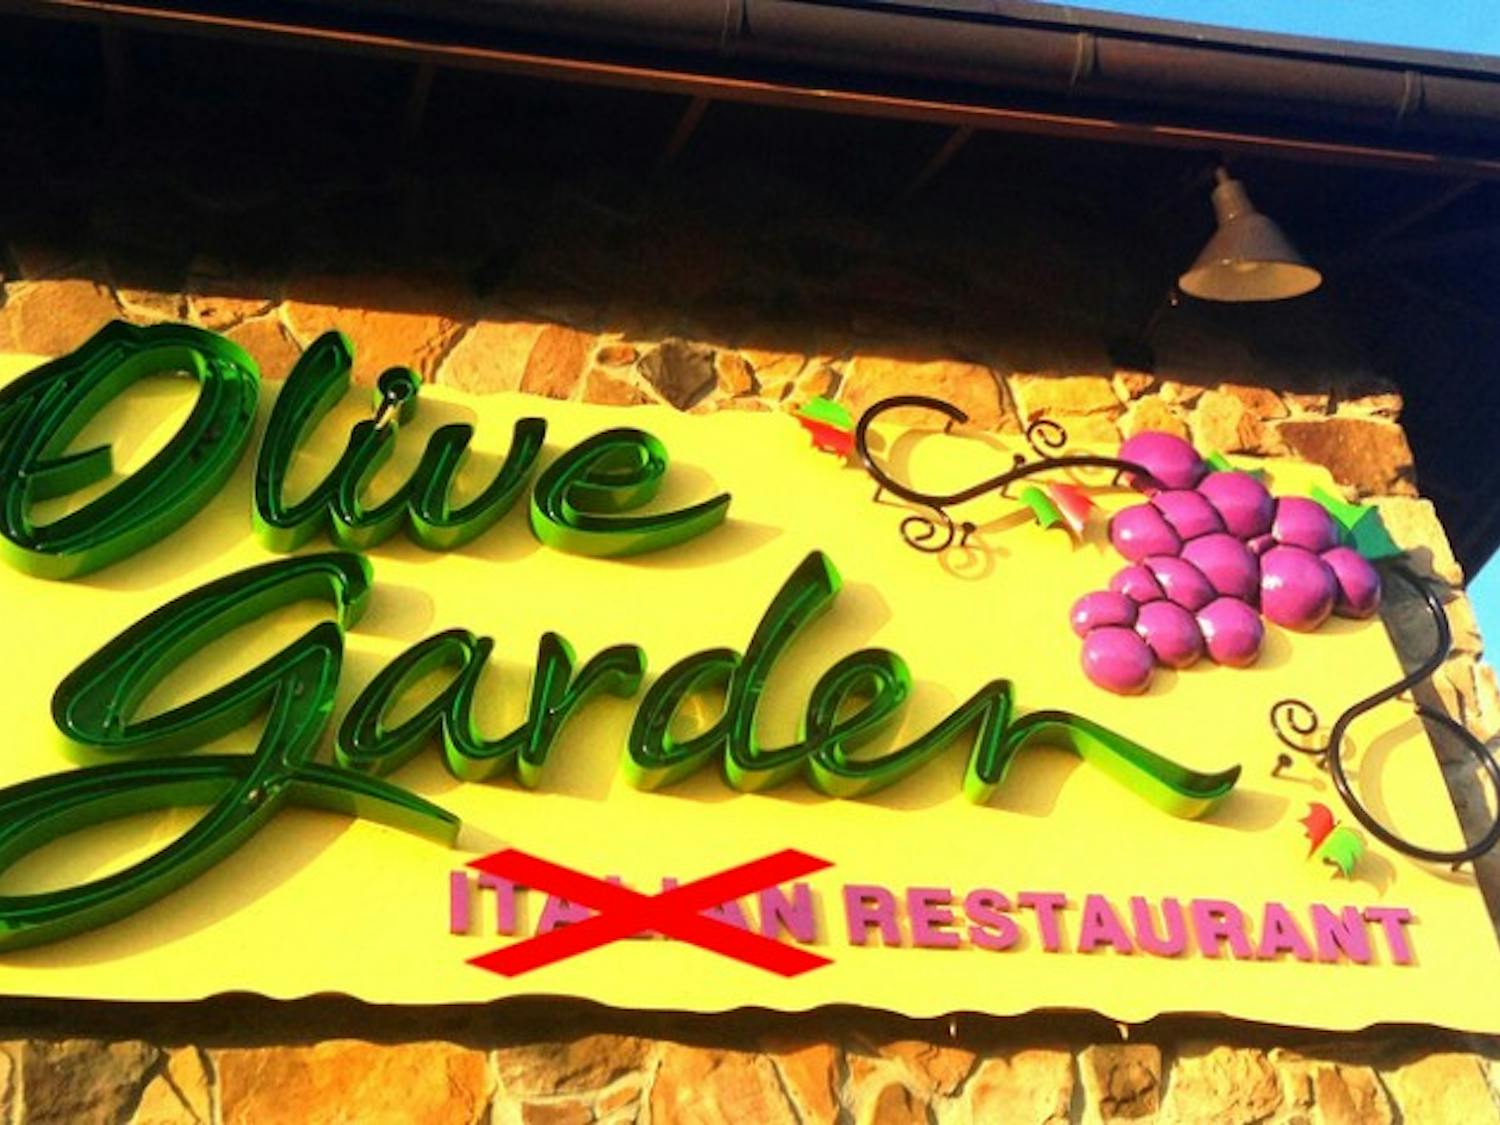 A more accurate description of Olive Garden’s cultural authenticity.